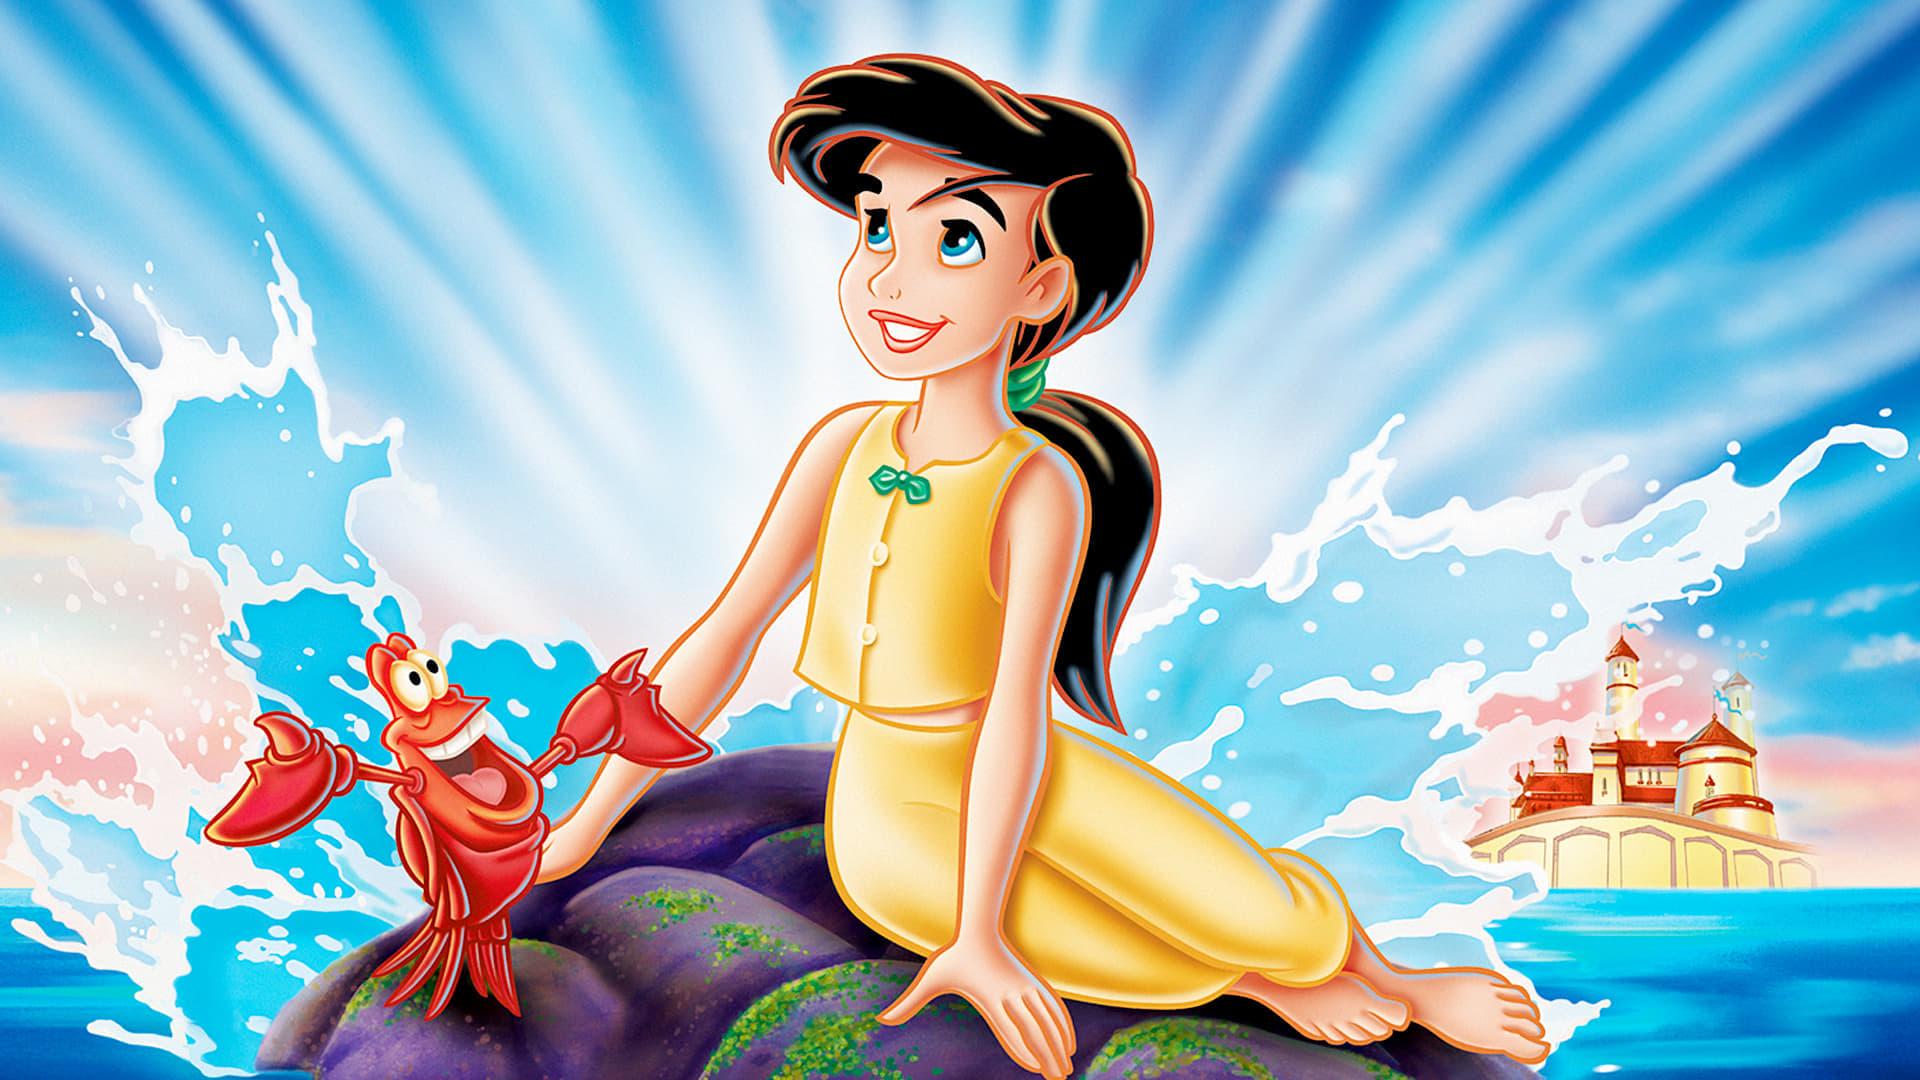 The Little Mermaid II: Return to the Sea backdrop